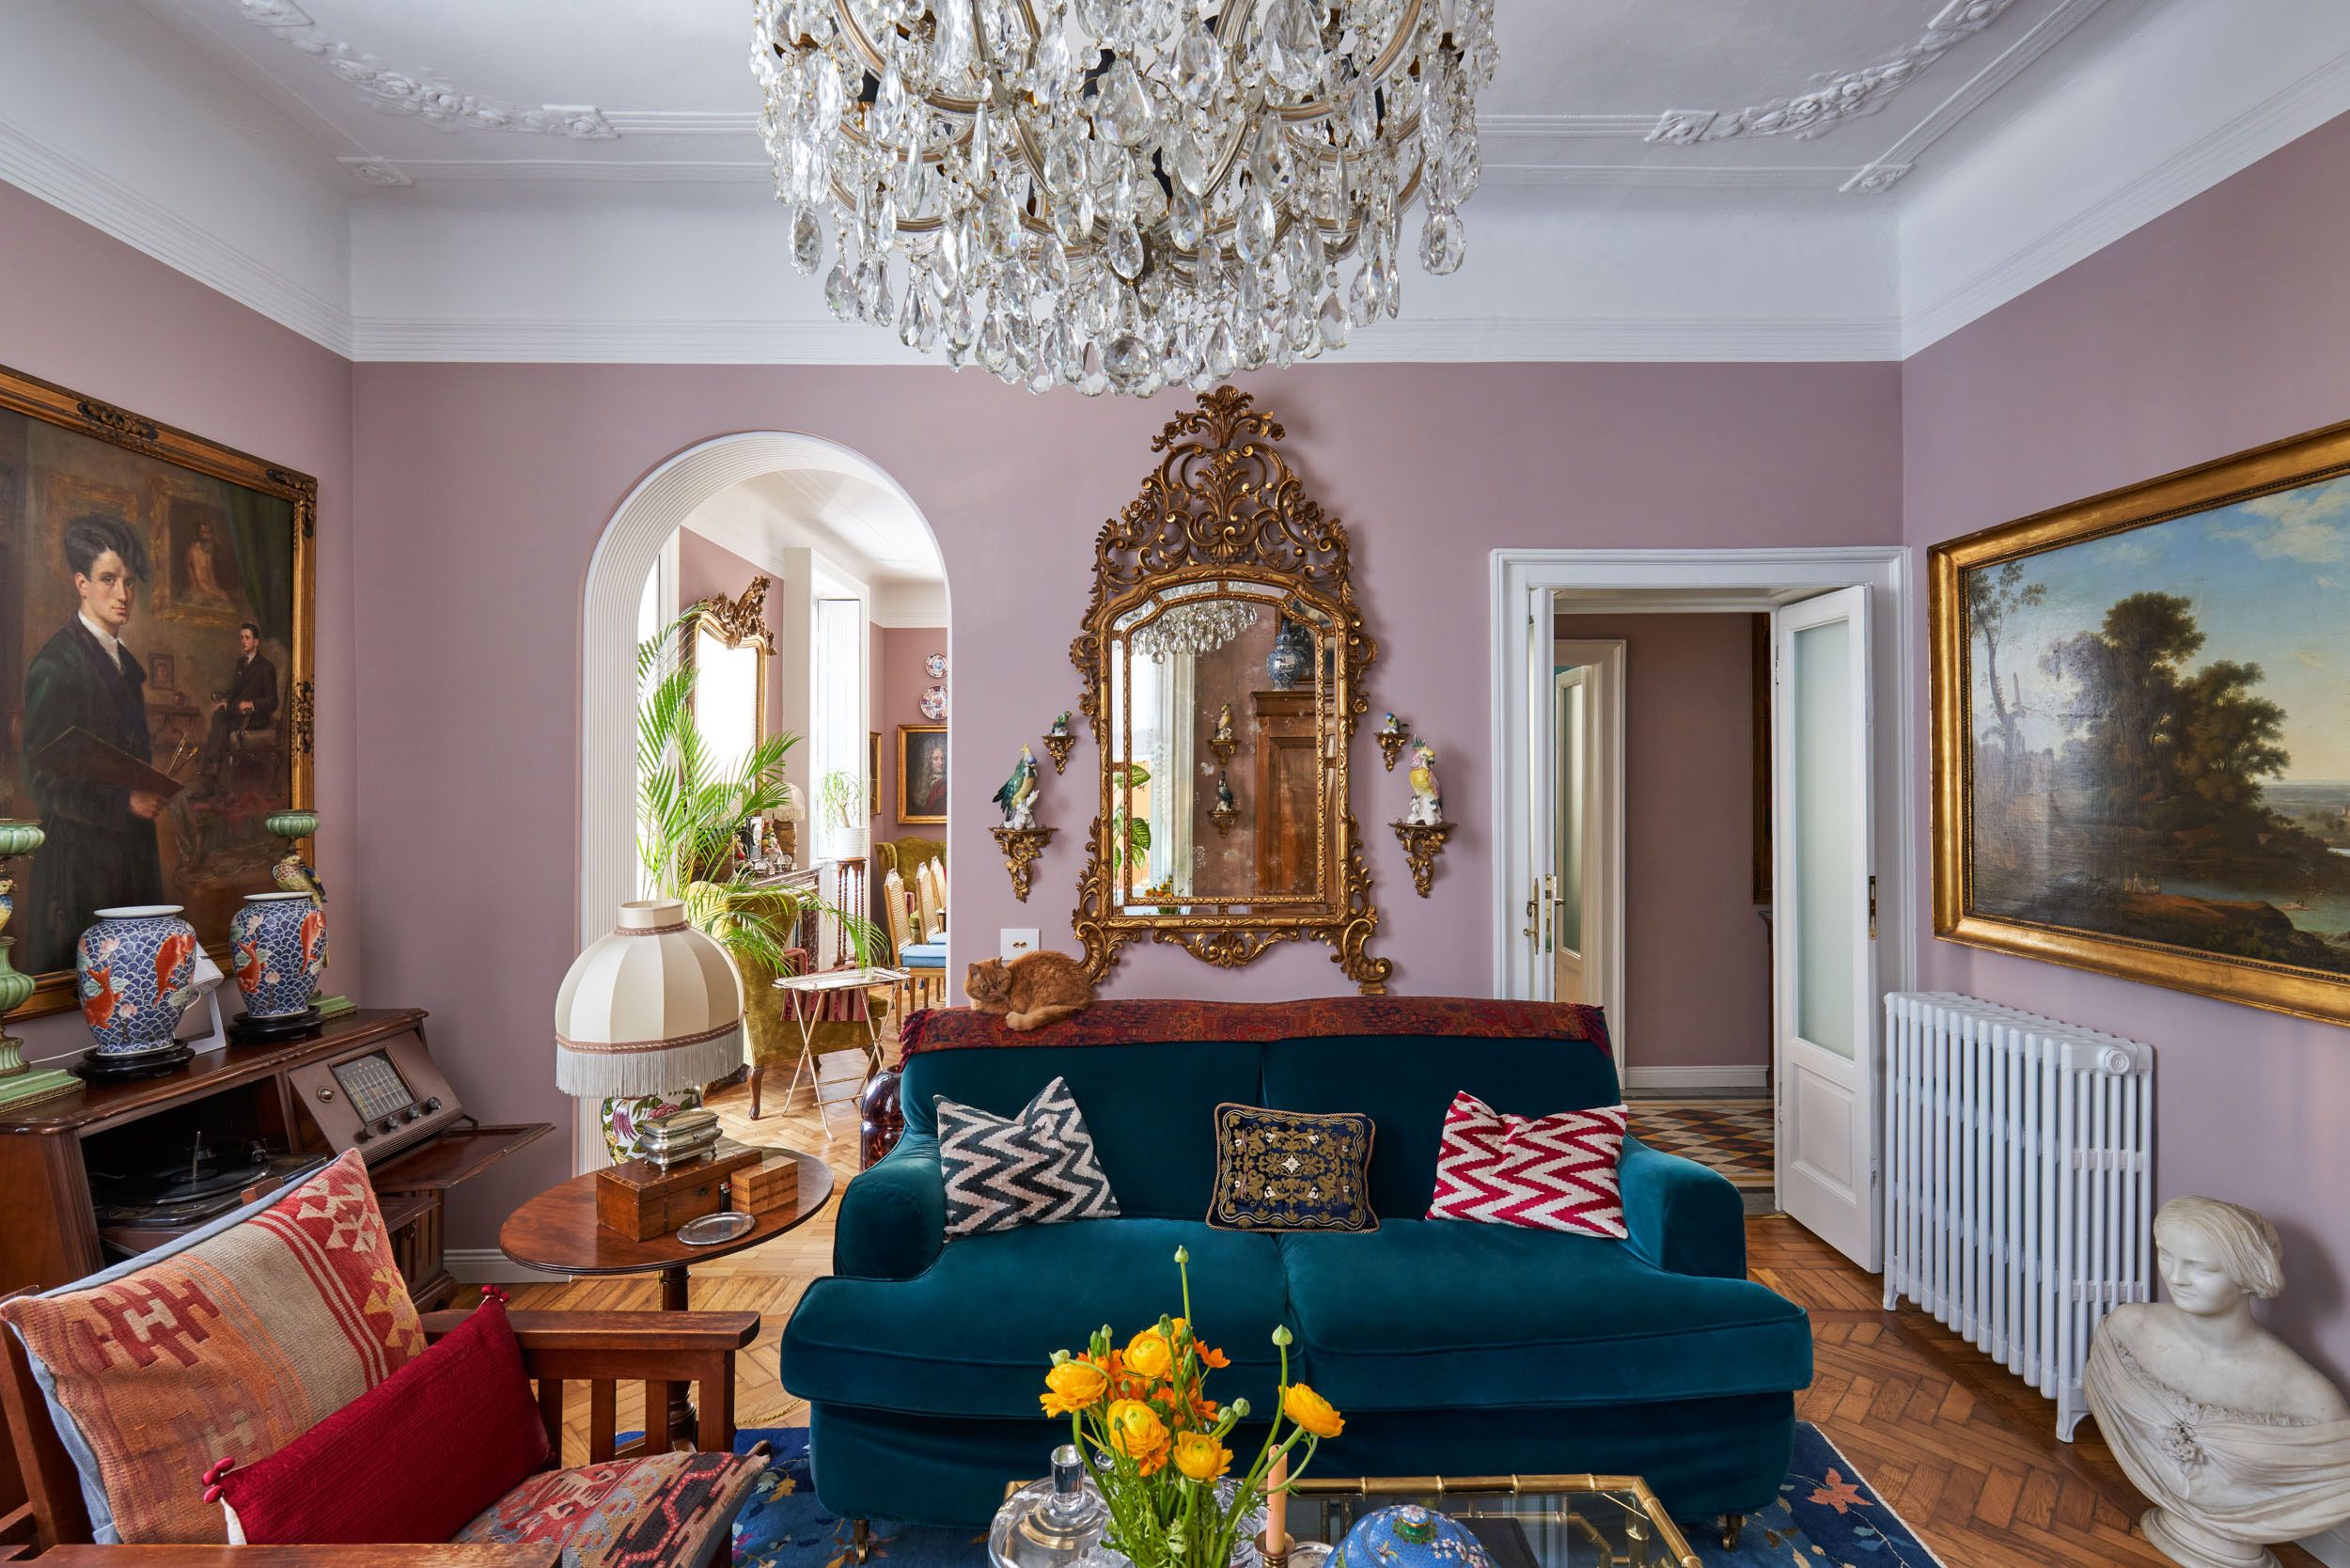 12 Living Room Color Ideas - Best Paint & Decor Colors for Living